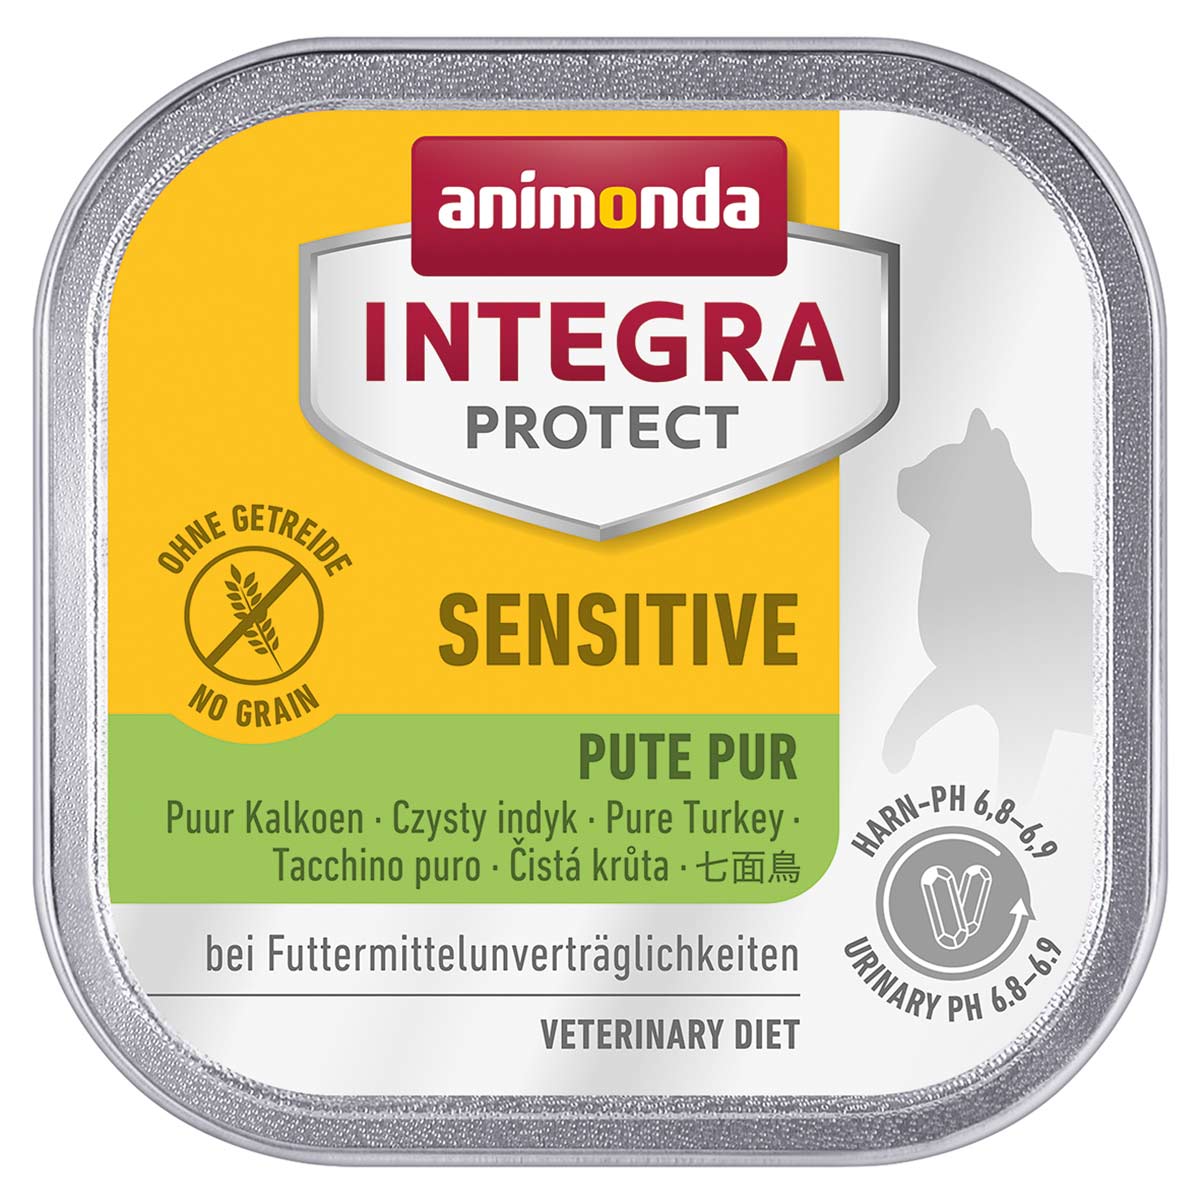 animonda INTEGRA PROTECT Sensitive Pute pur 6x100 g